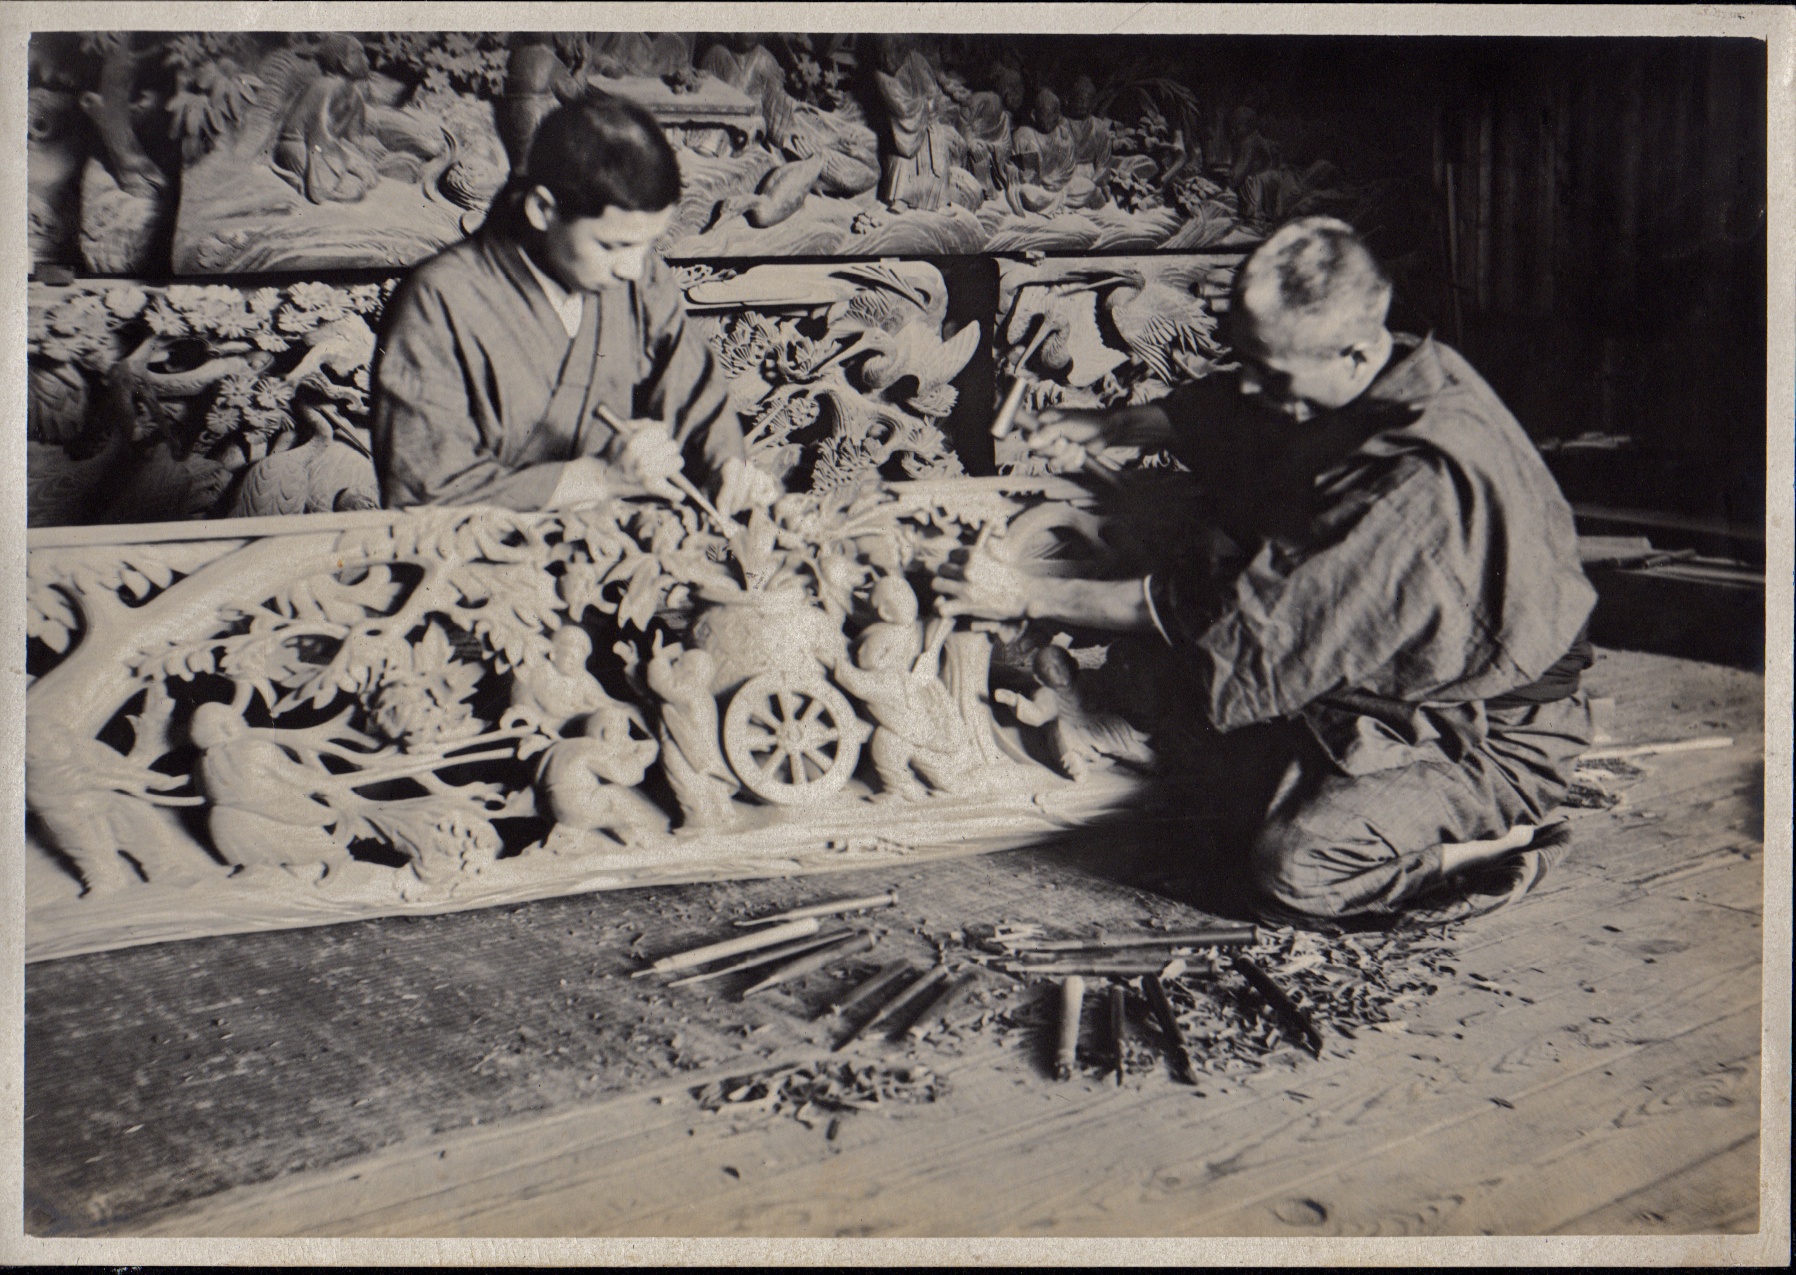 Carving a Frieze in Japan (1914 by Elstner Hilton)